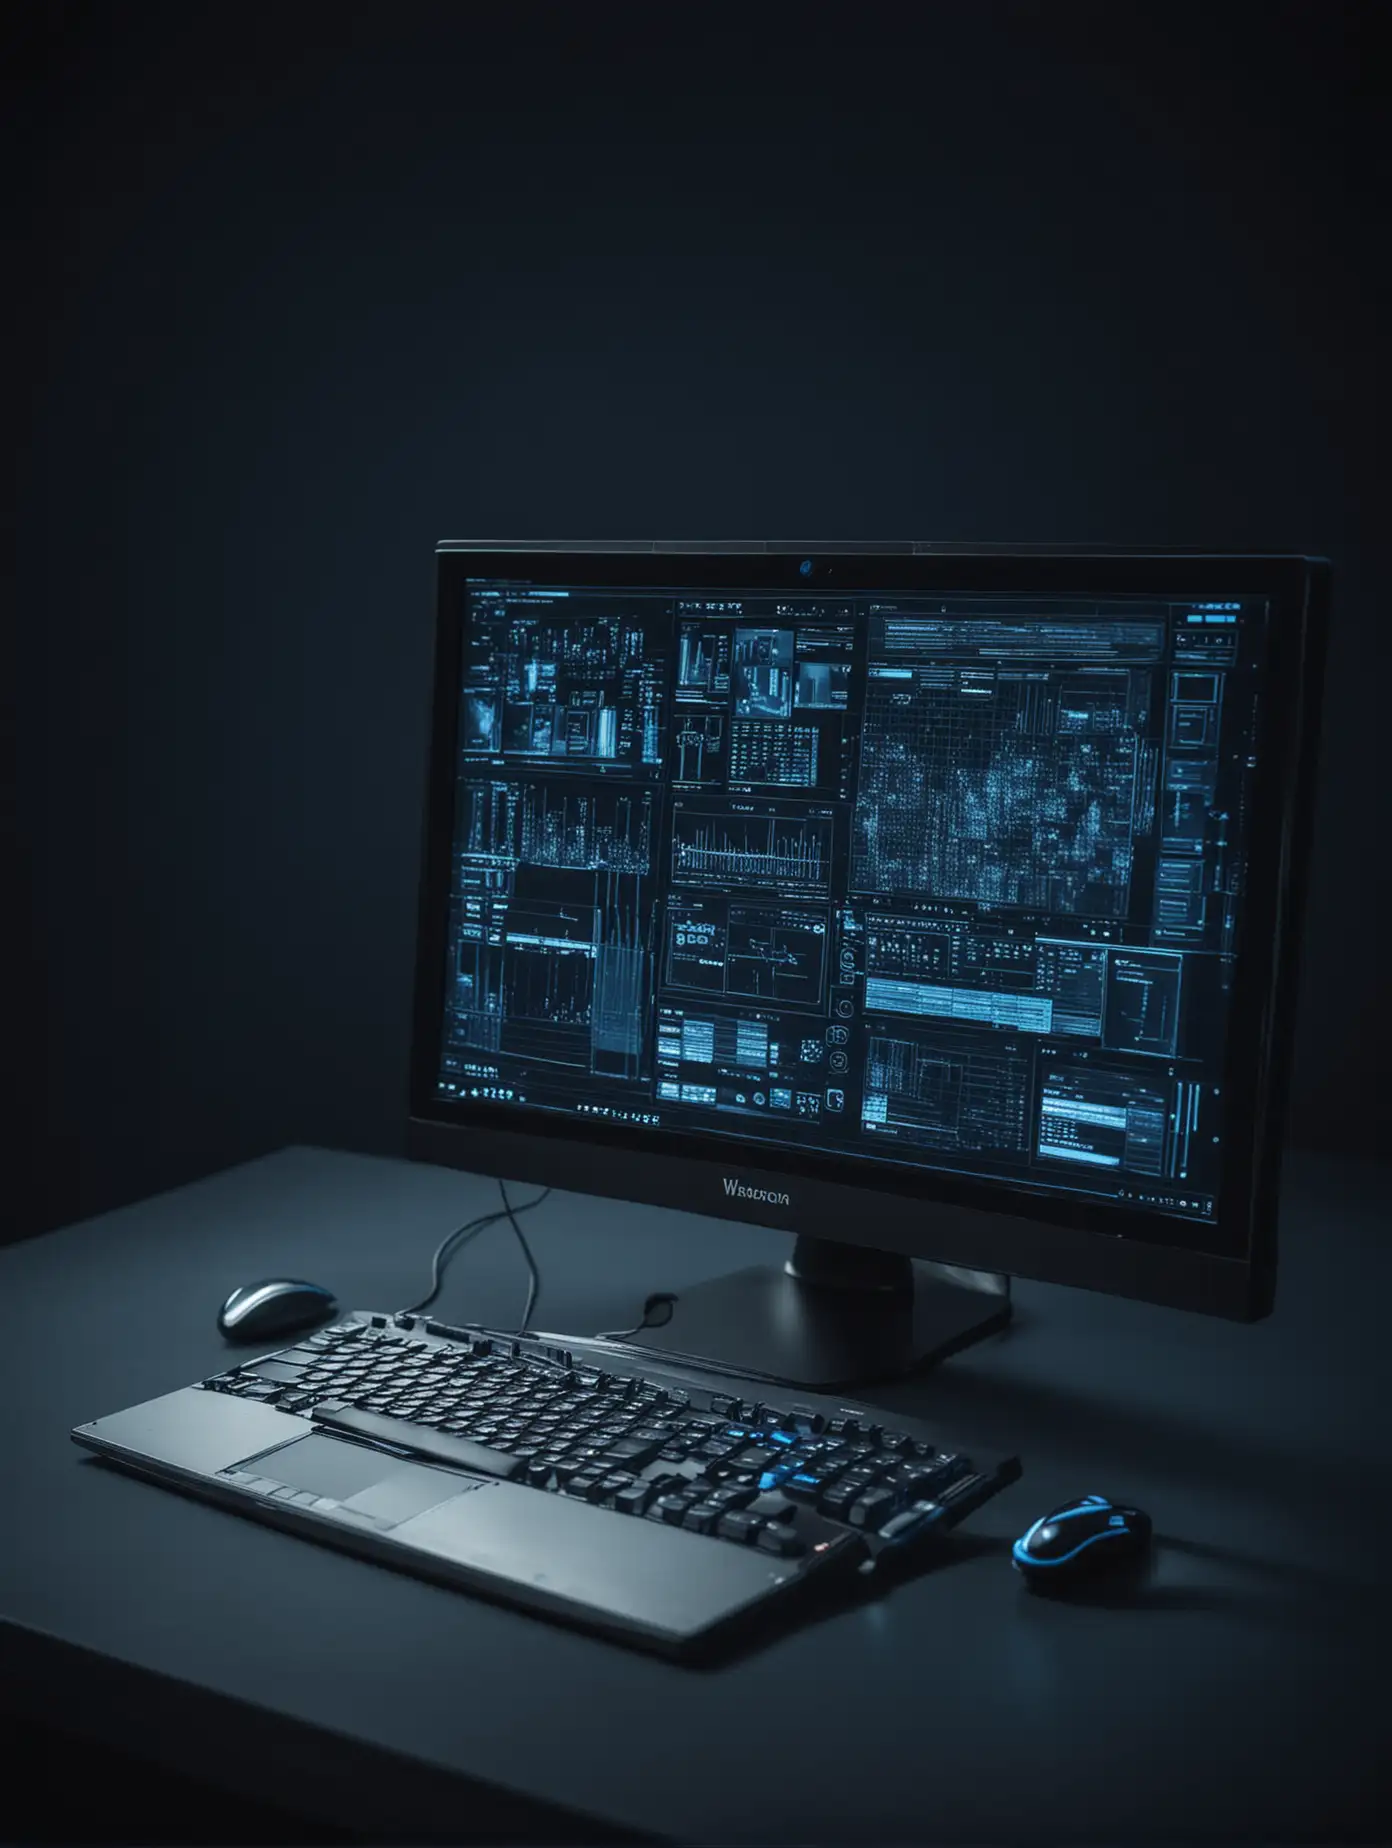 dark blue theme. Professional photo of a computer screen